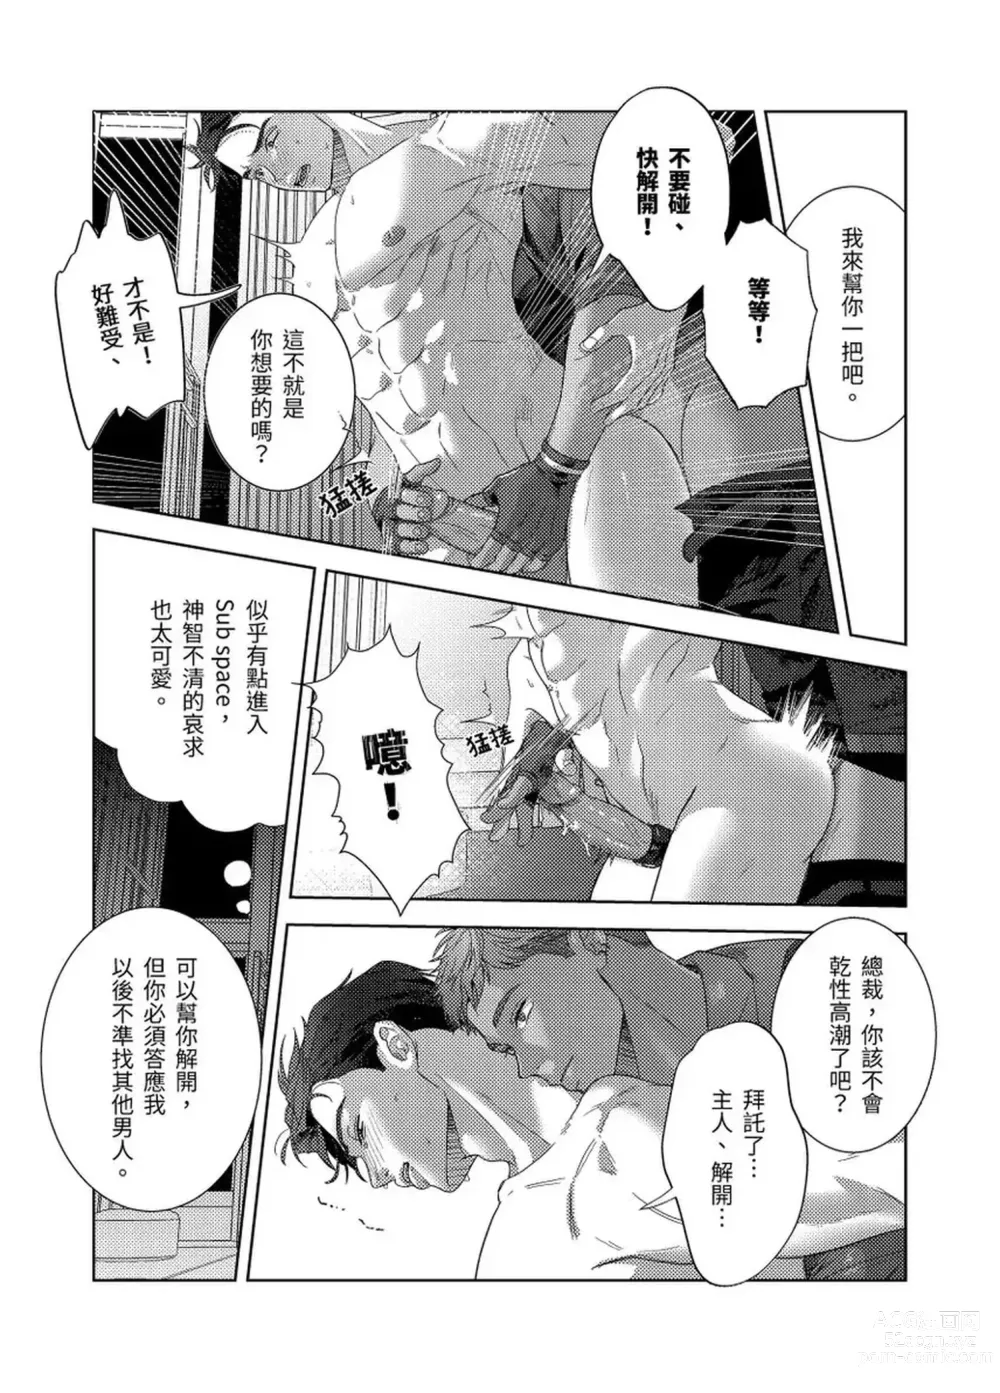 Page 51 of manga Dom&Sub